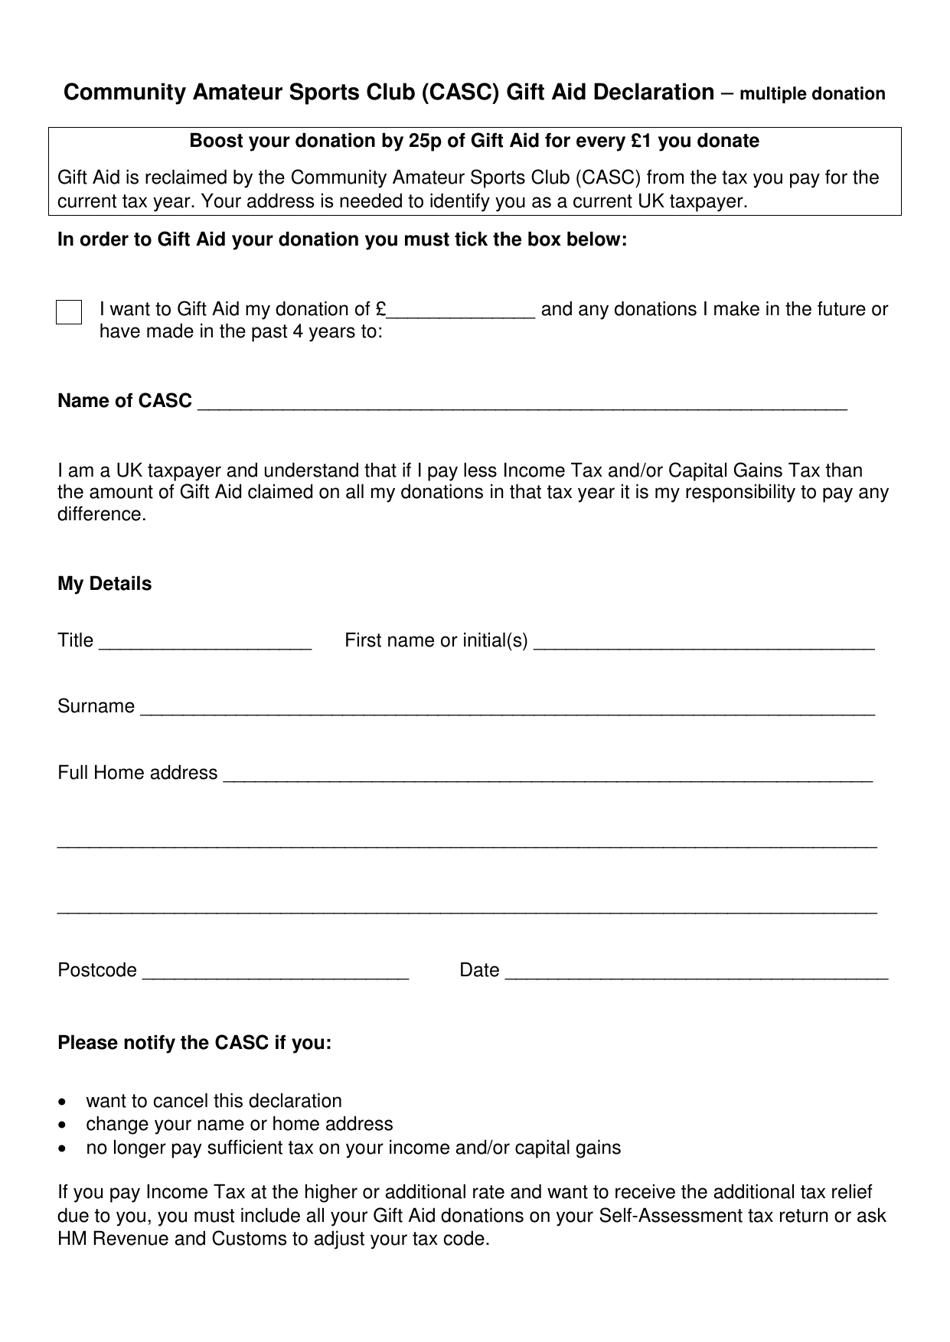 Community Amateur Sports Club (CASC) Gift Aid Declaration - Multiple Donation - United Kingdom, Page 1